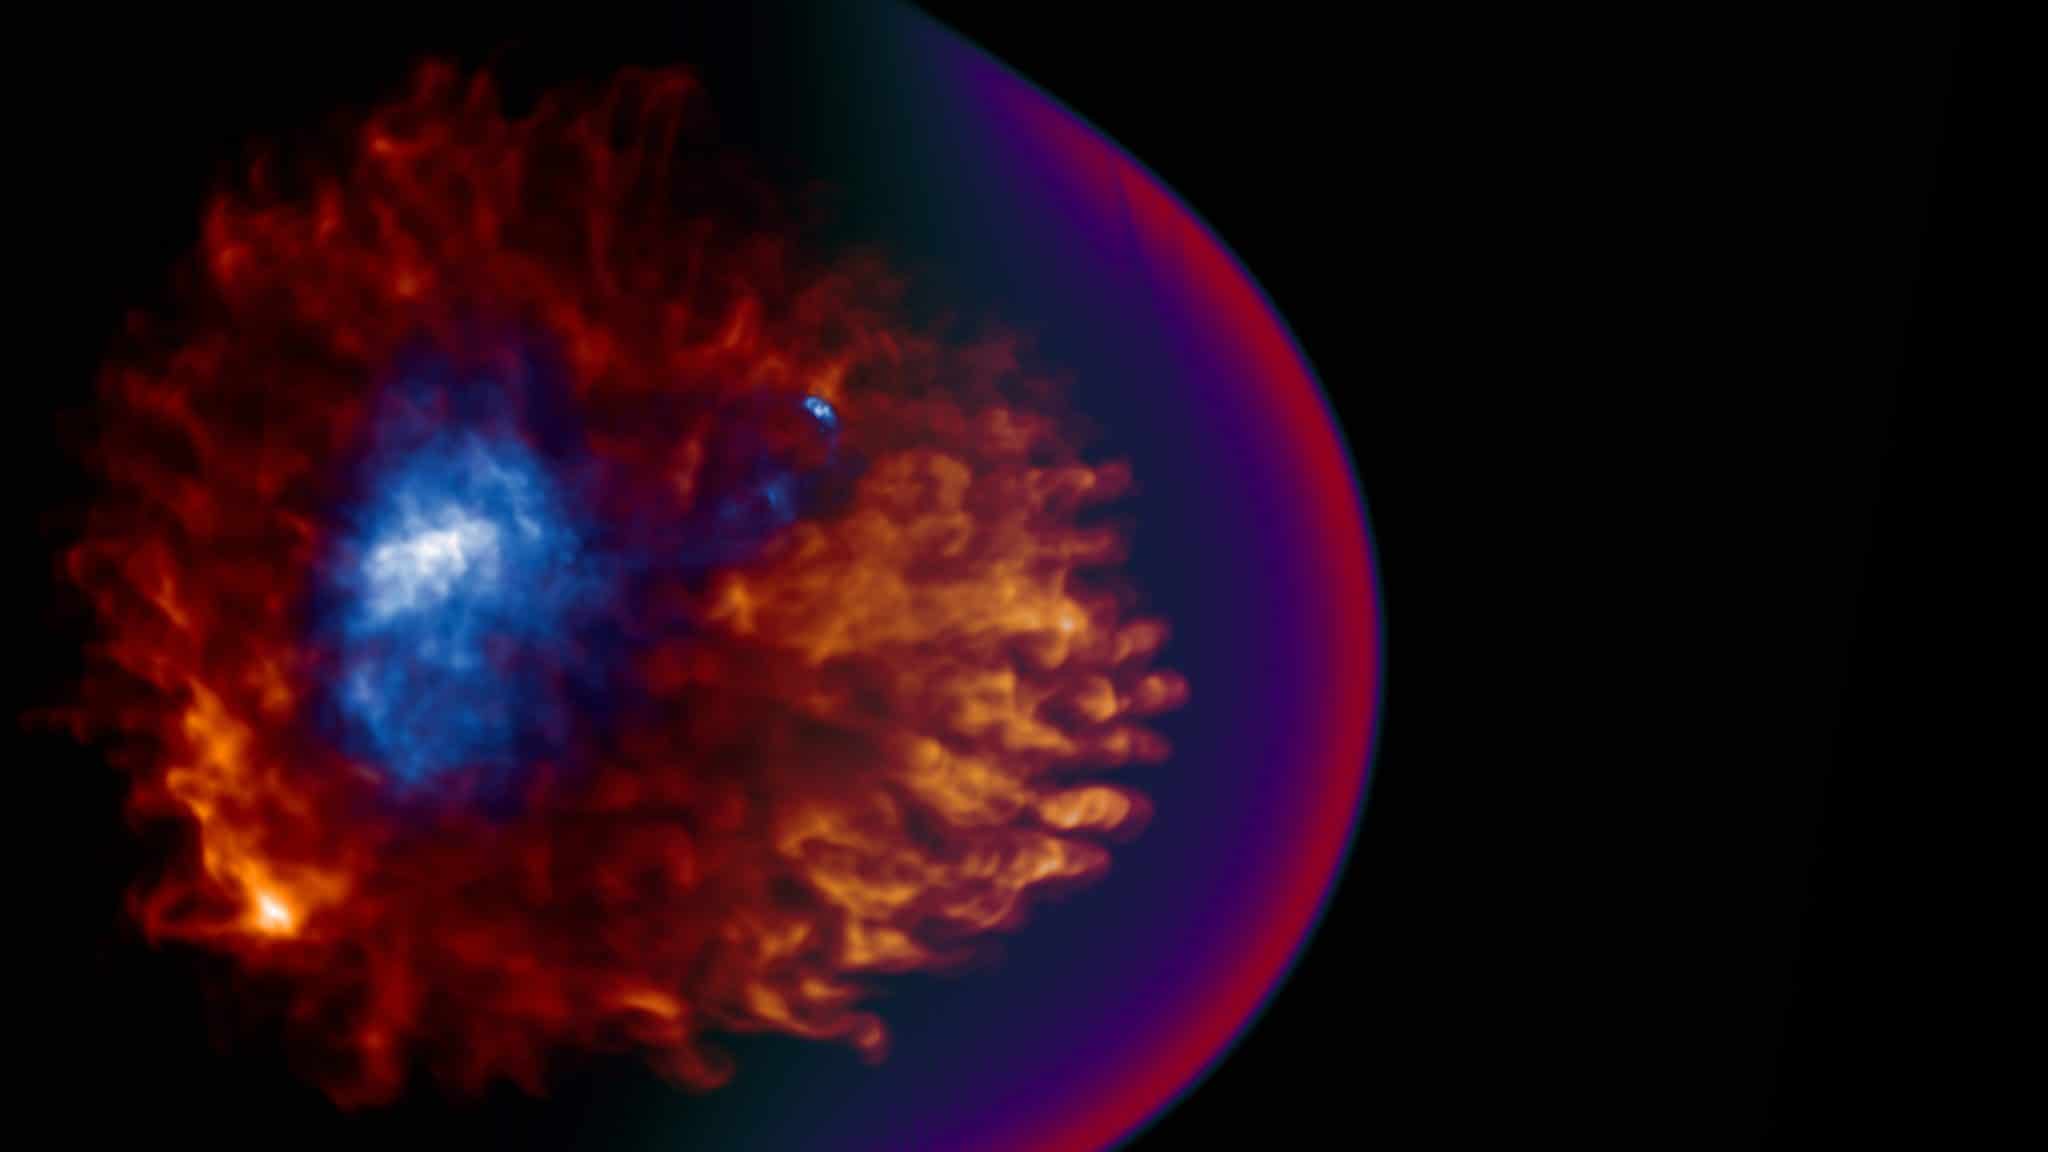 Supernova Remnant Simulations, by Christopher Kolb